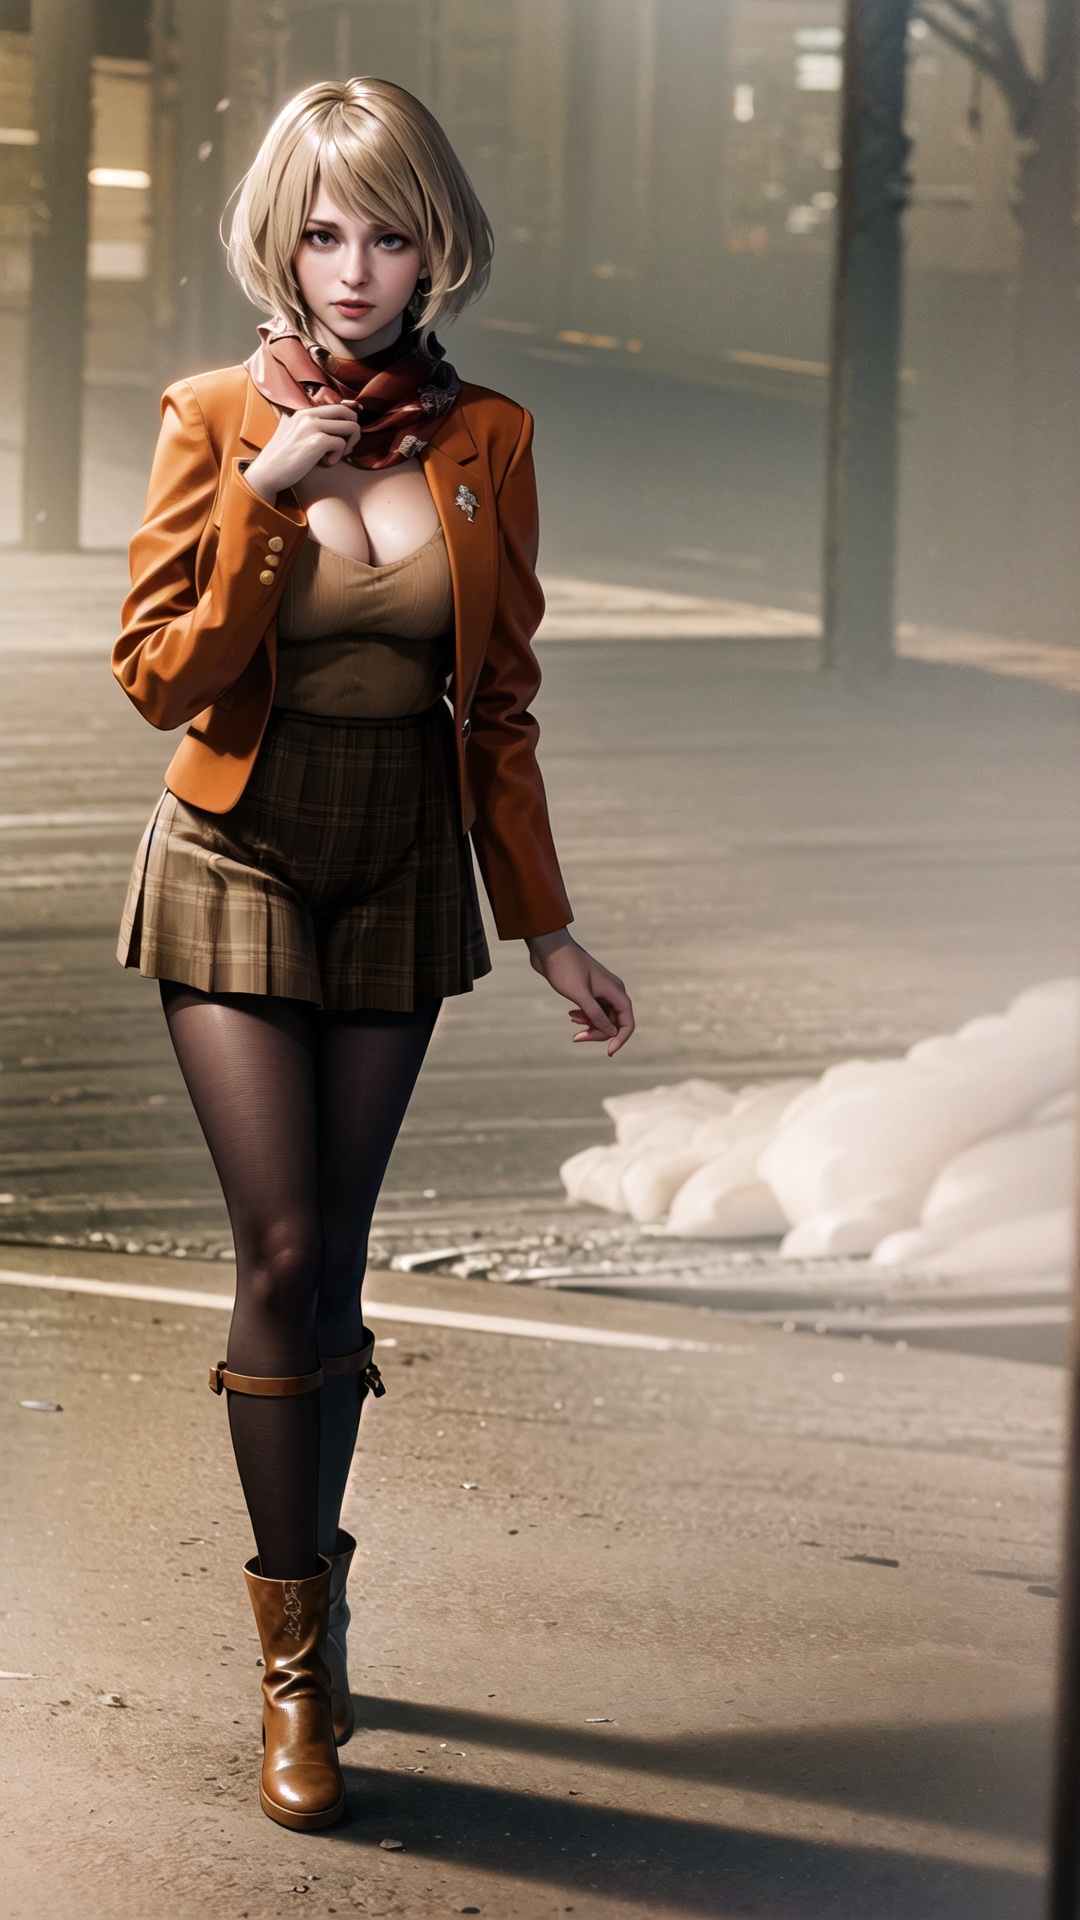 SXZ Ashley Graham - Ella Freya [ Resident Evil ] - sxz-ashley-graham, Stable Diffusion LoRA